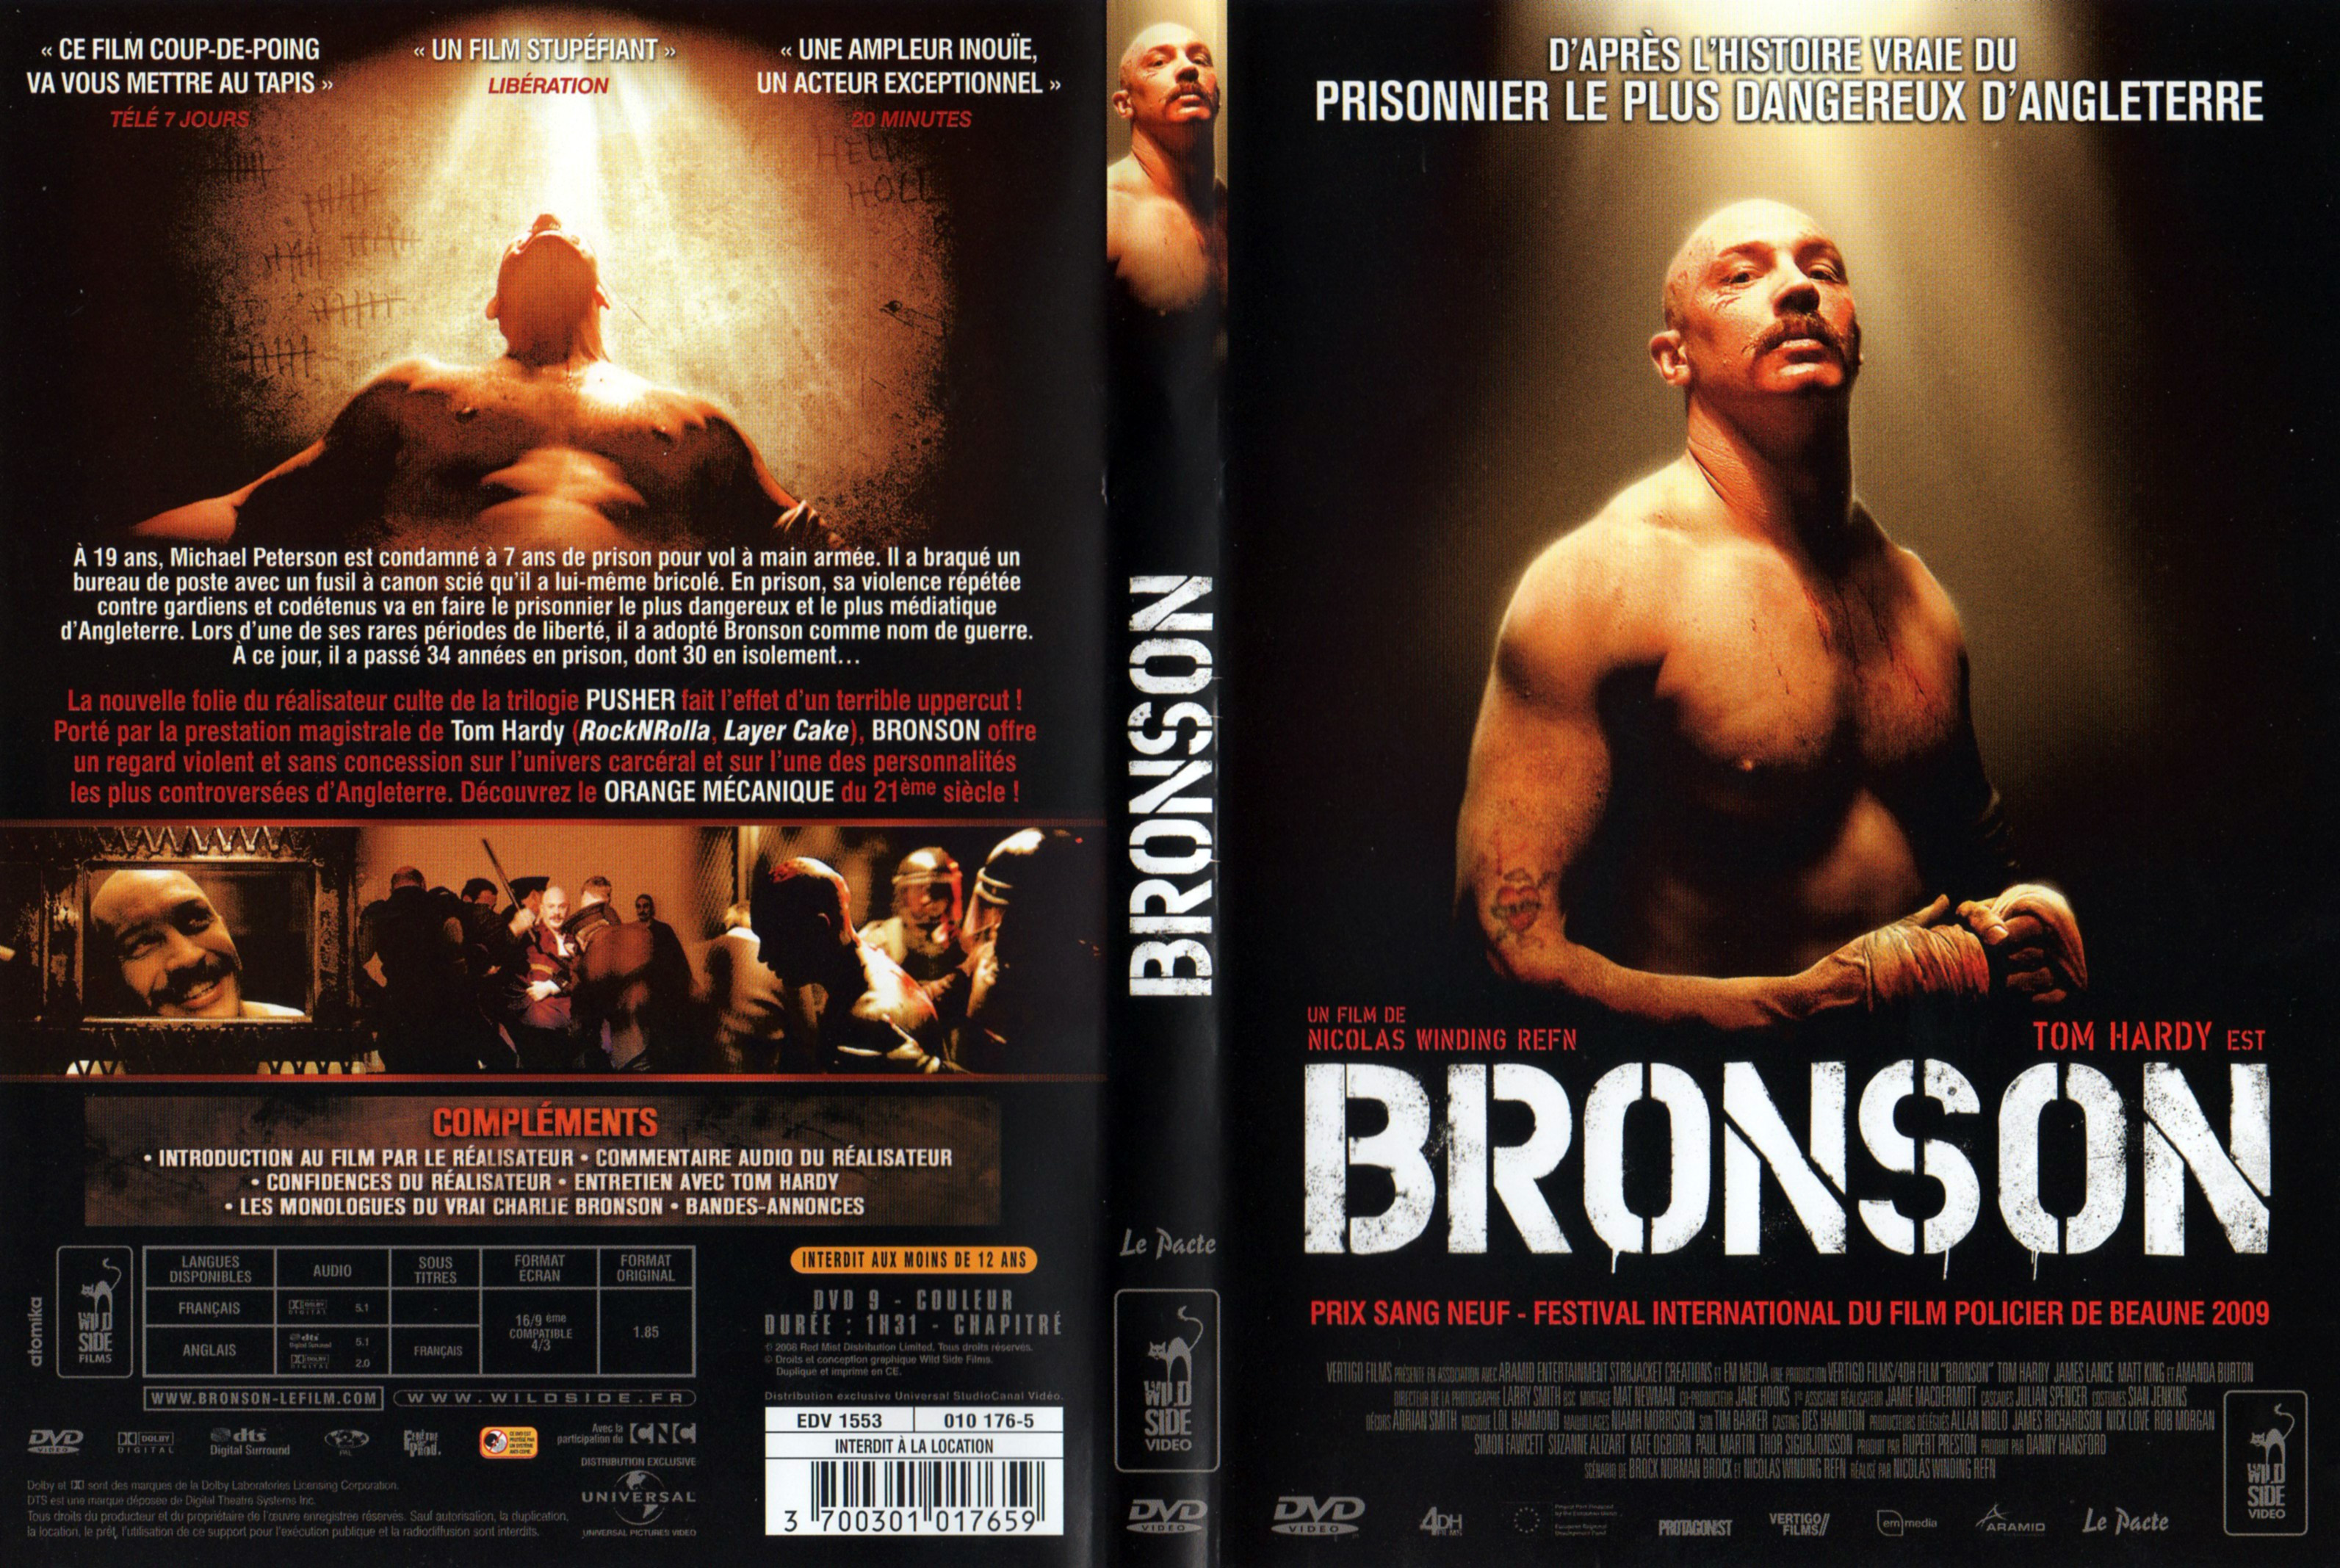 Jaquette DVD Bronson